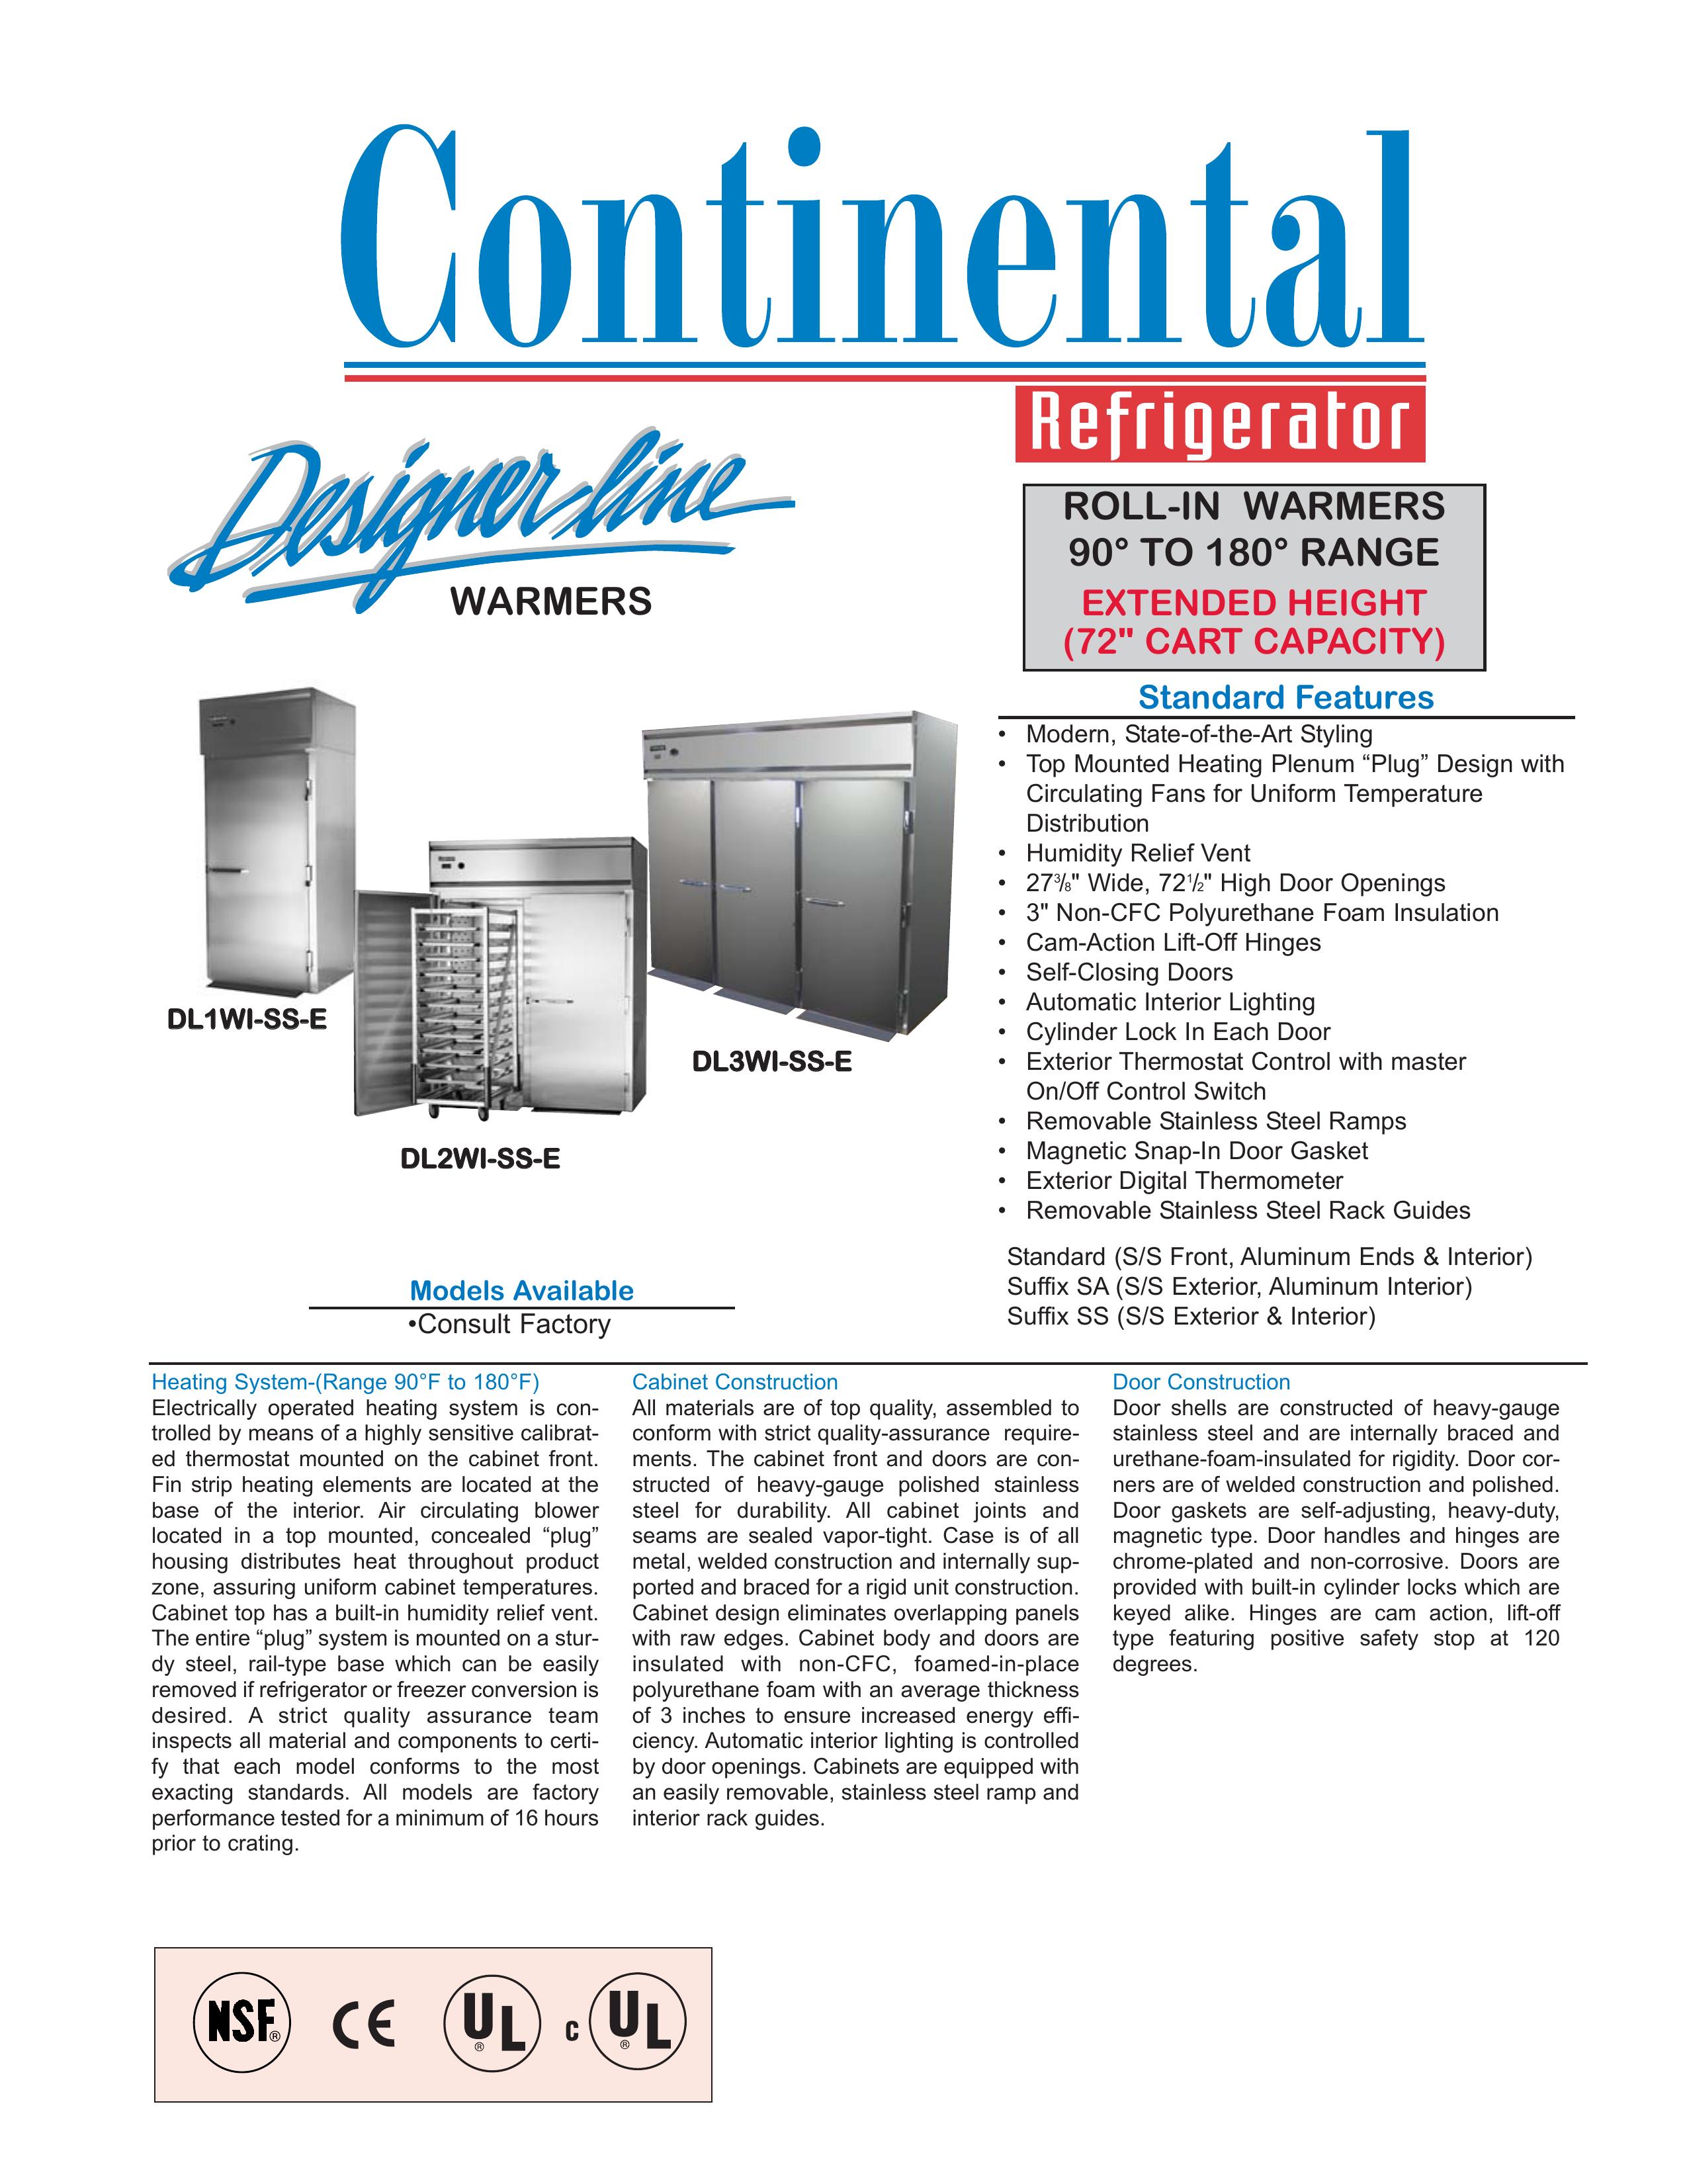 Continental DL2WI-SS-E Refrigerator User Manual